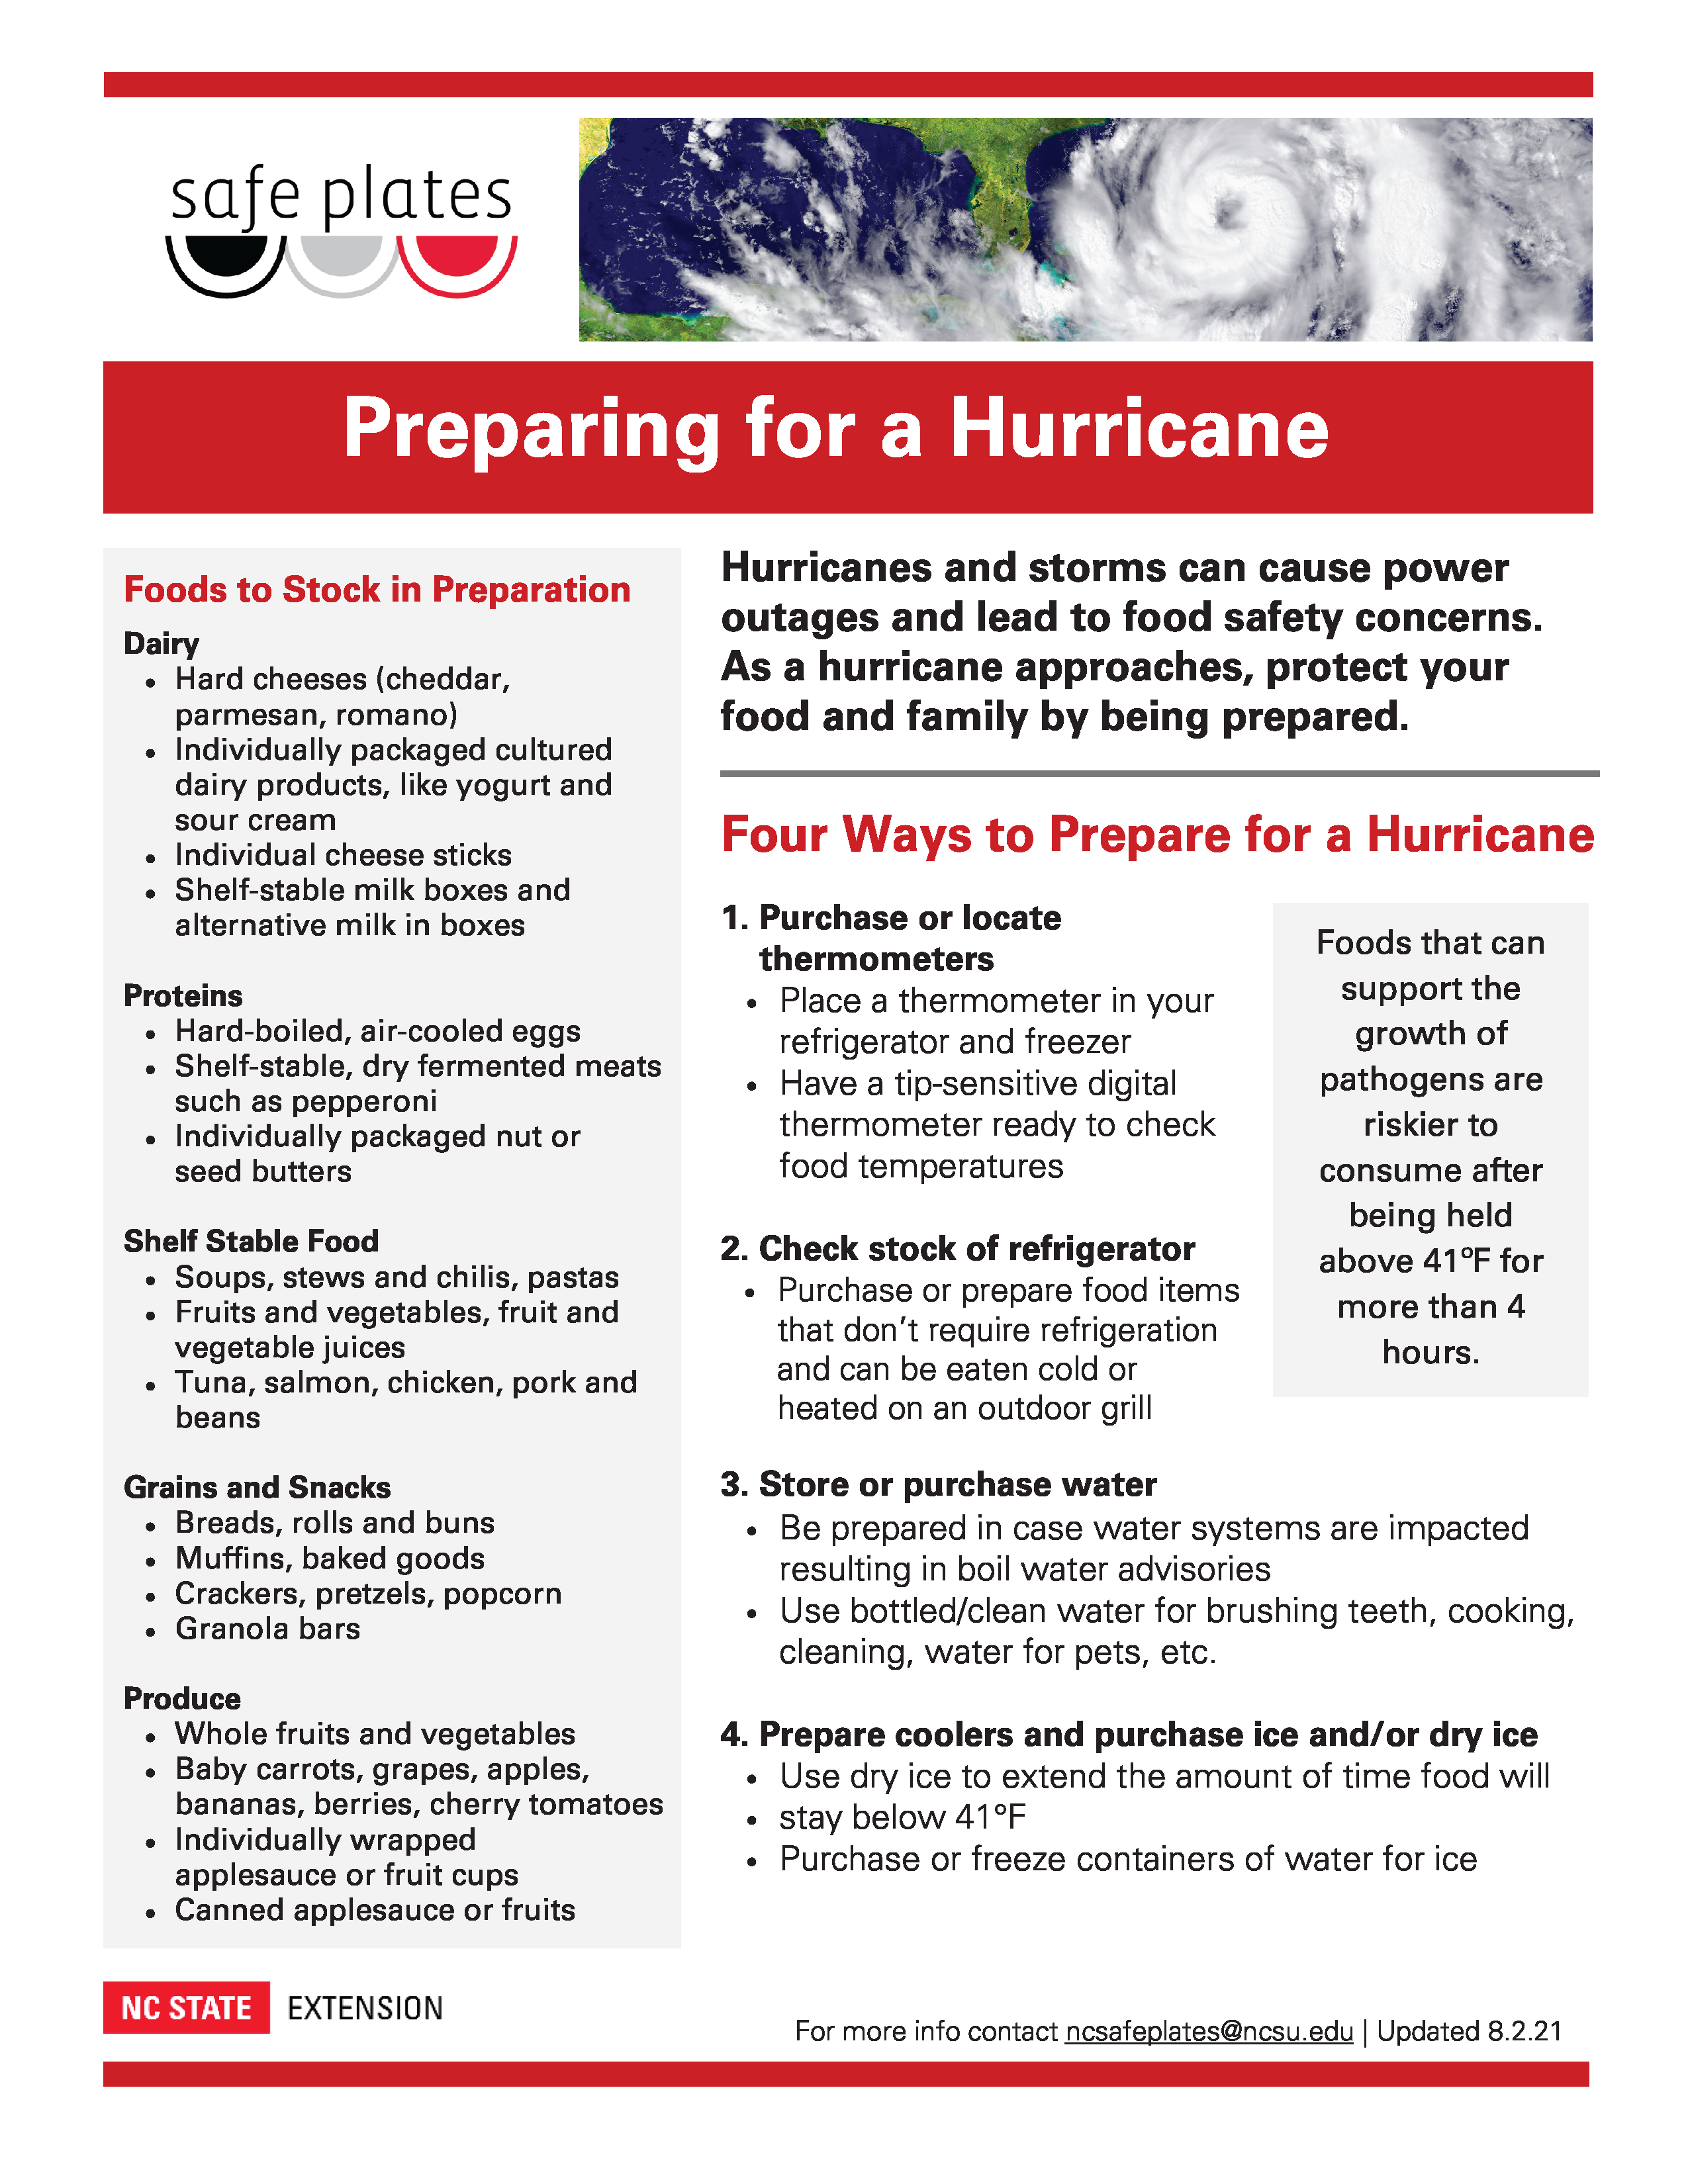 Safeplates Preparing for Hurricane food safety tips flyer